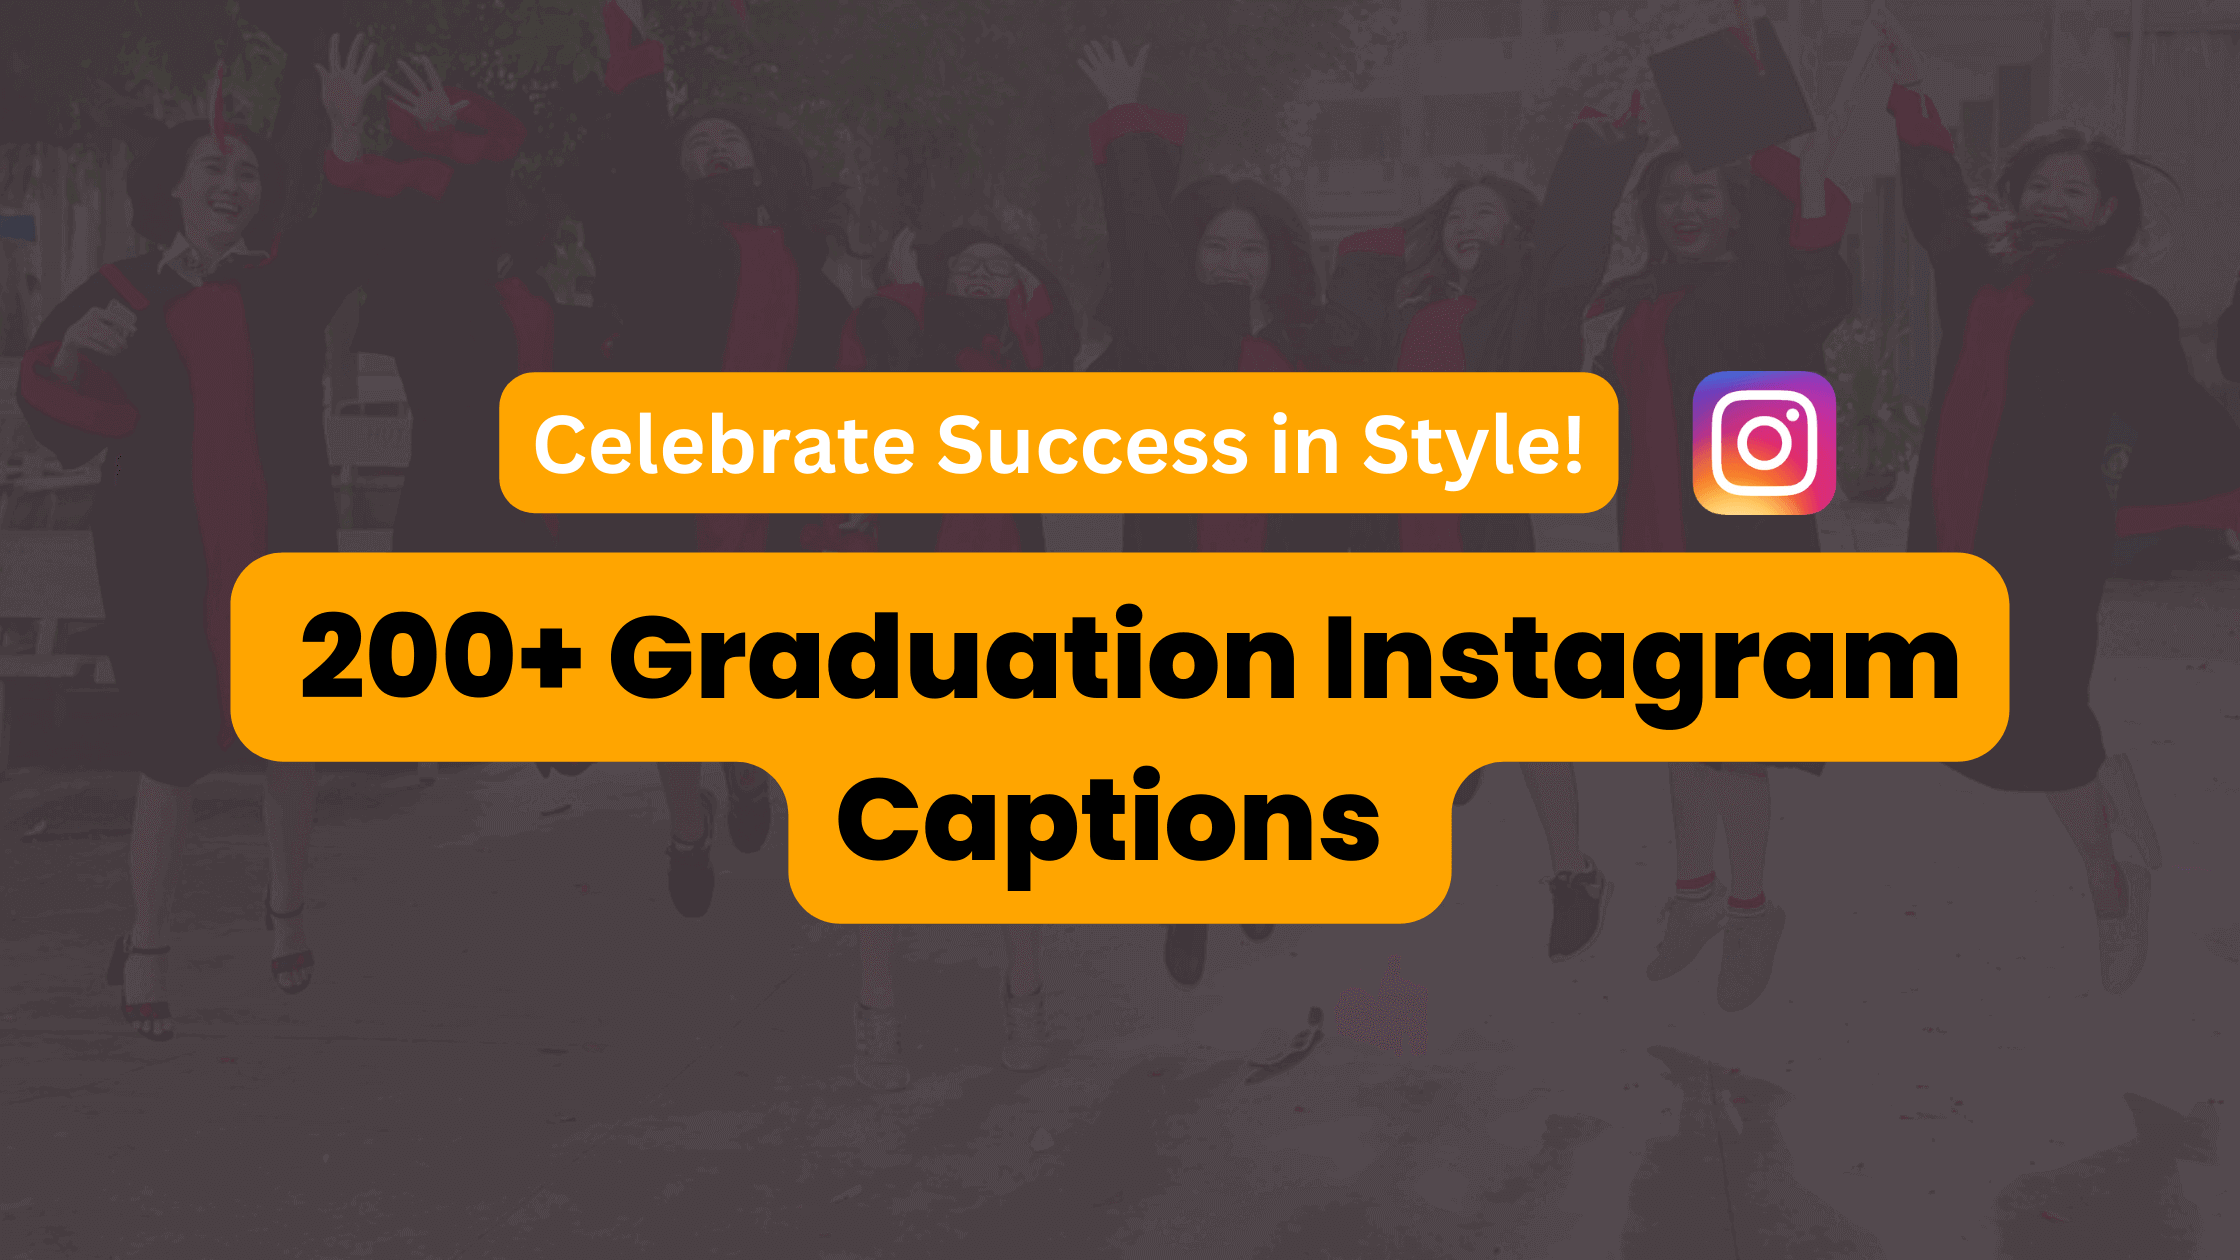 Top 200 Graduation Instagram Captions - Celebrate Success in Style!